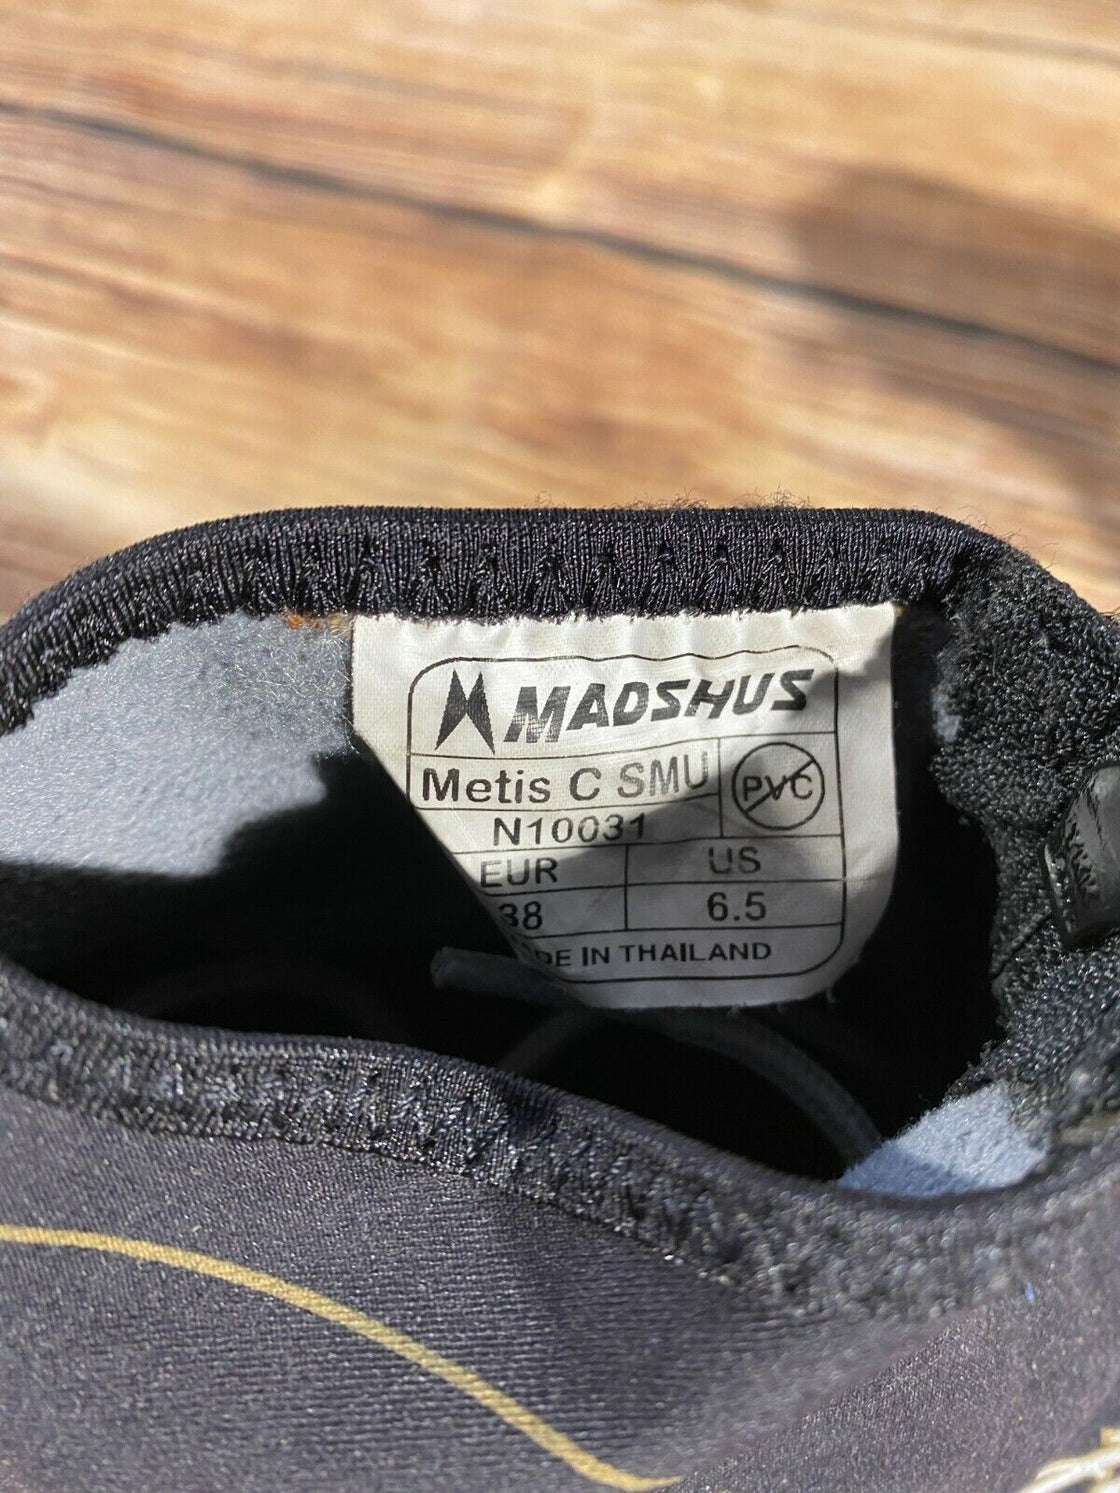 Madshus Metis-C Nordic Cross Country Ski Boots Size EU38 US5.5 NNN bindings